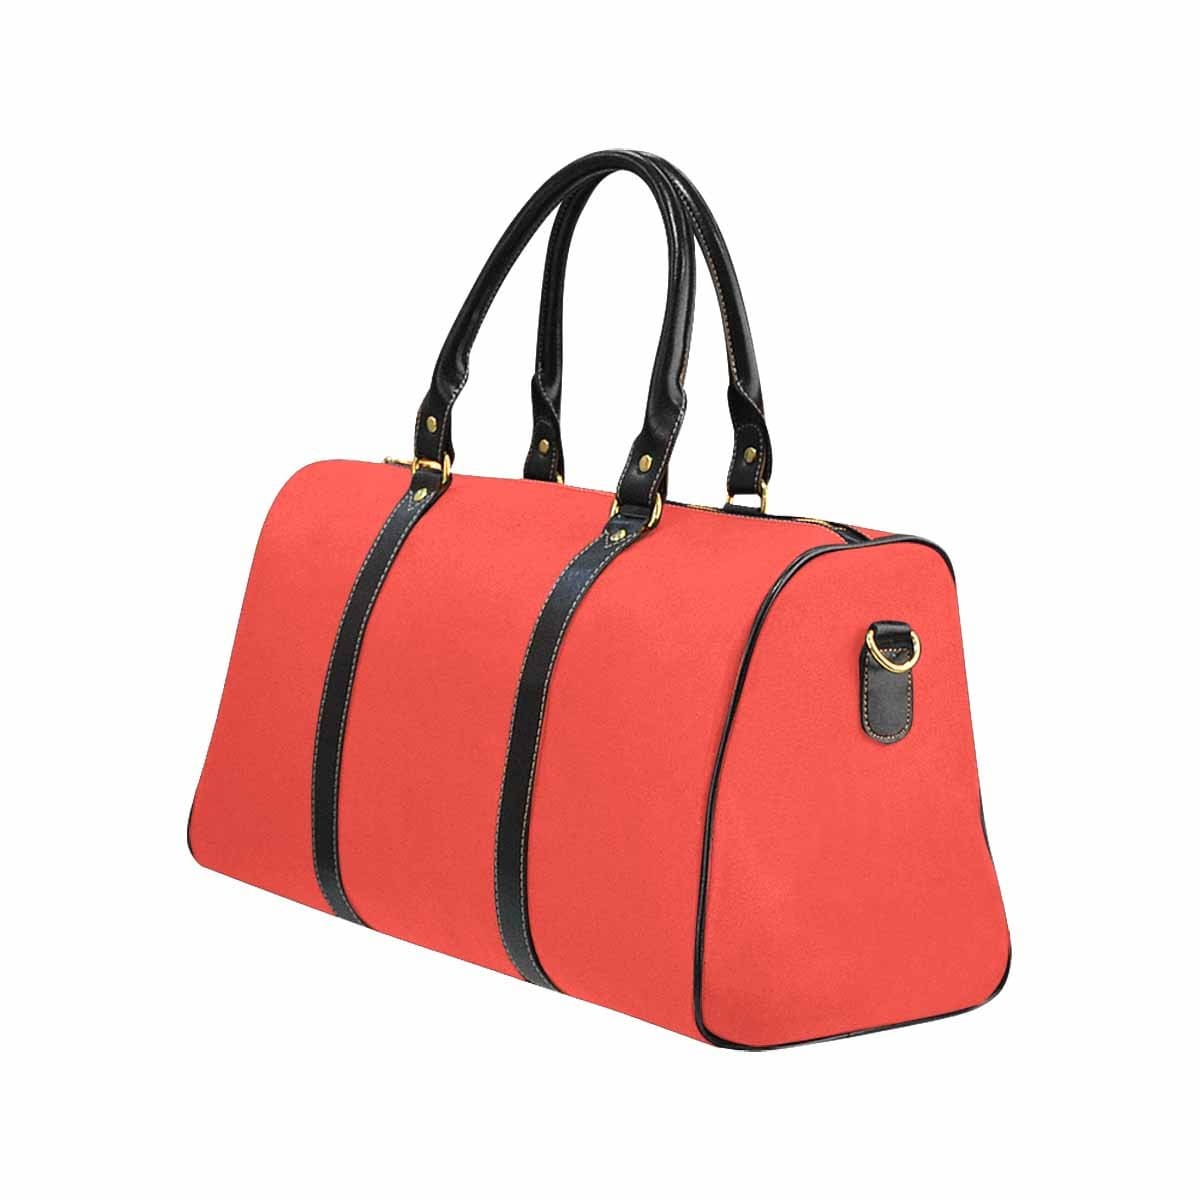 Red Orange Travel Bag Carry On Luggage Adjustable Strap Black - Bags | Travel